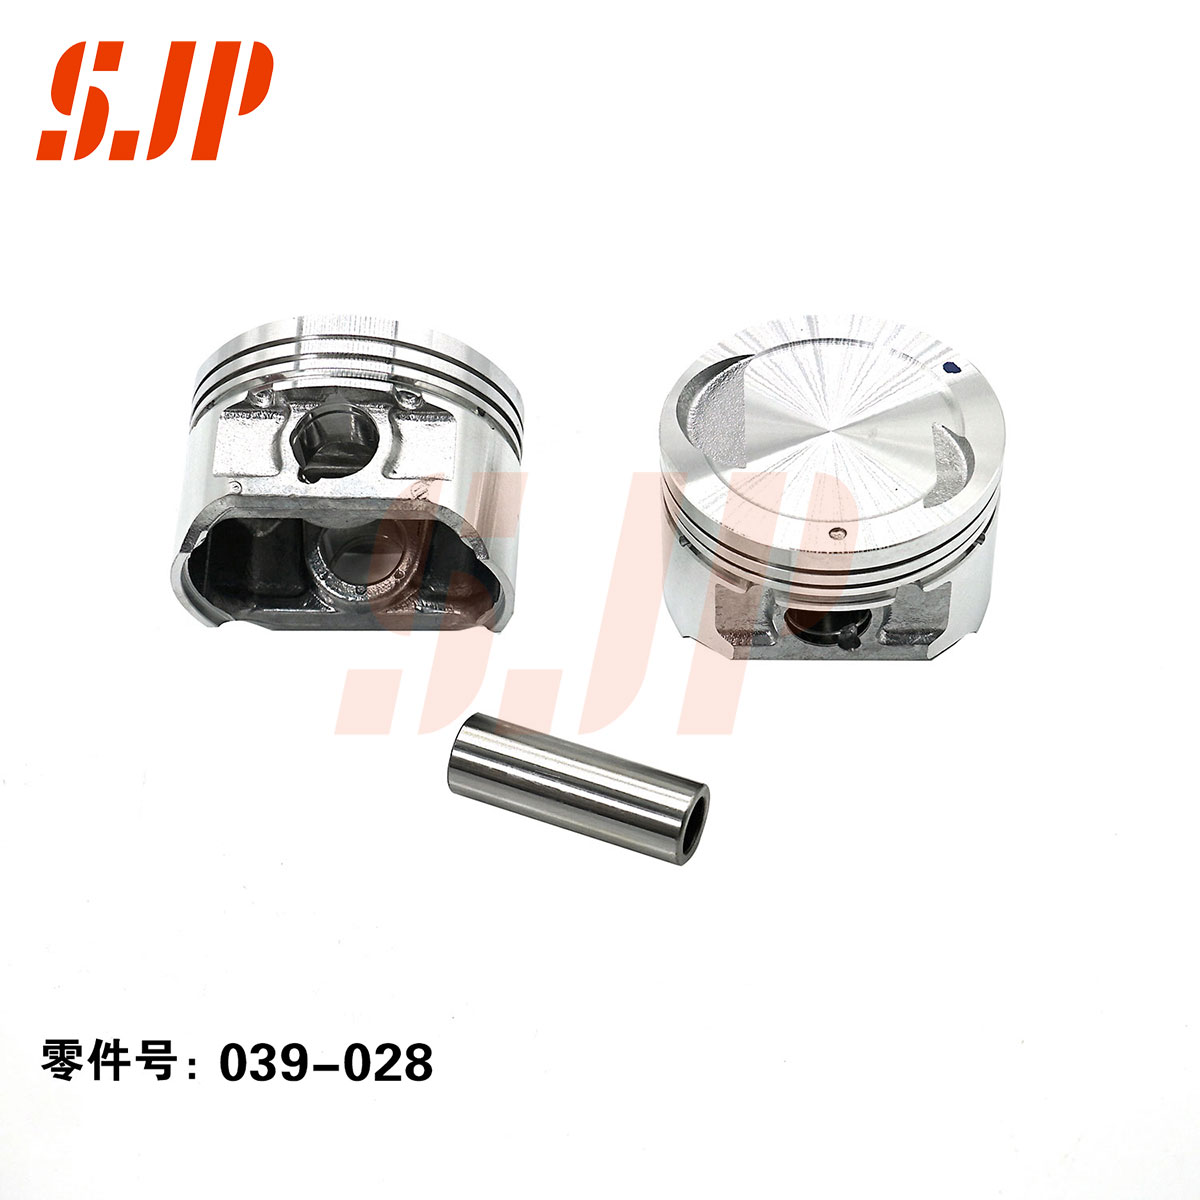 SJ-039-028 Piston And Pin For BJ410/V1